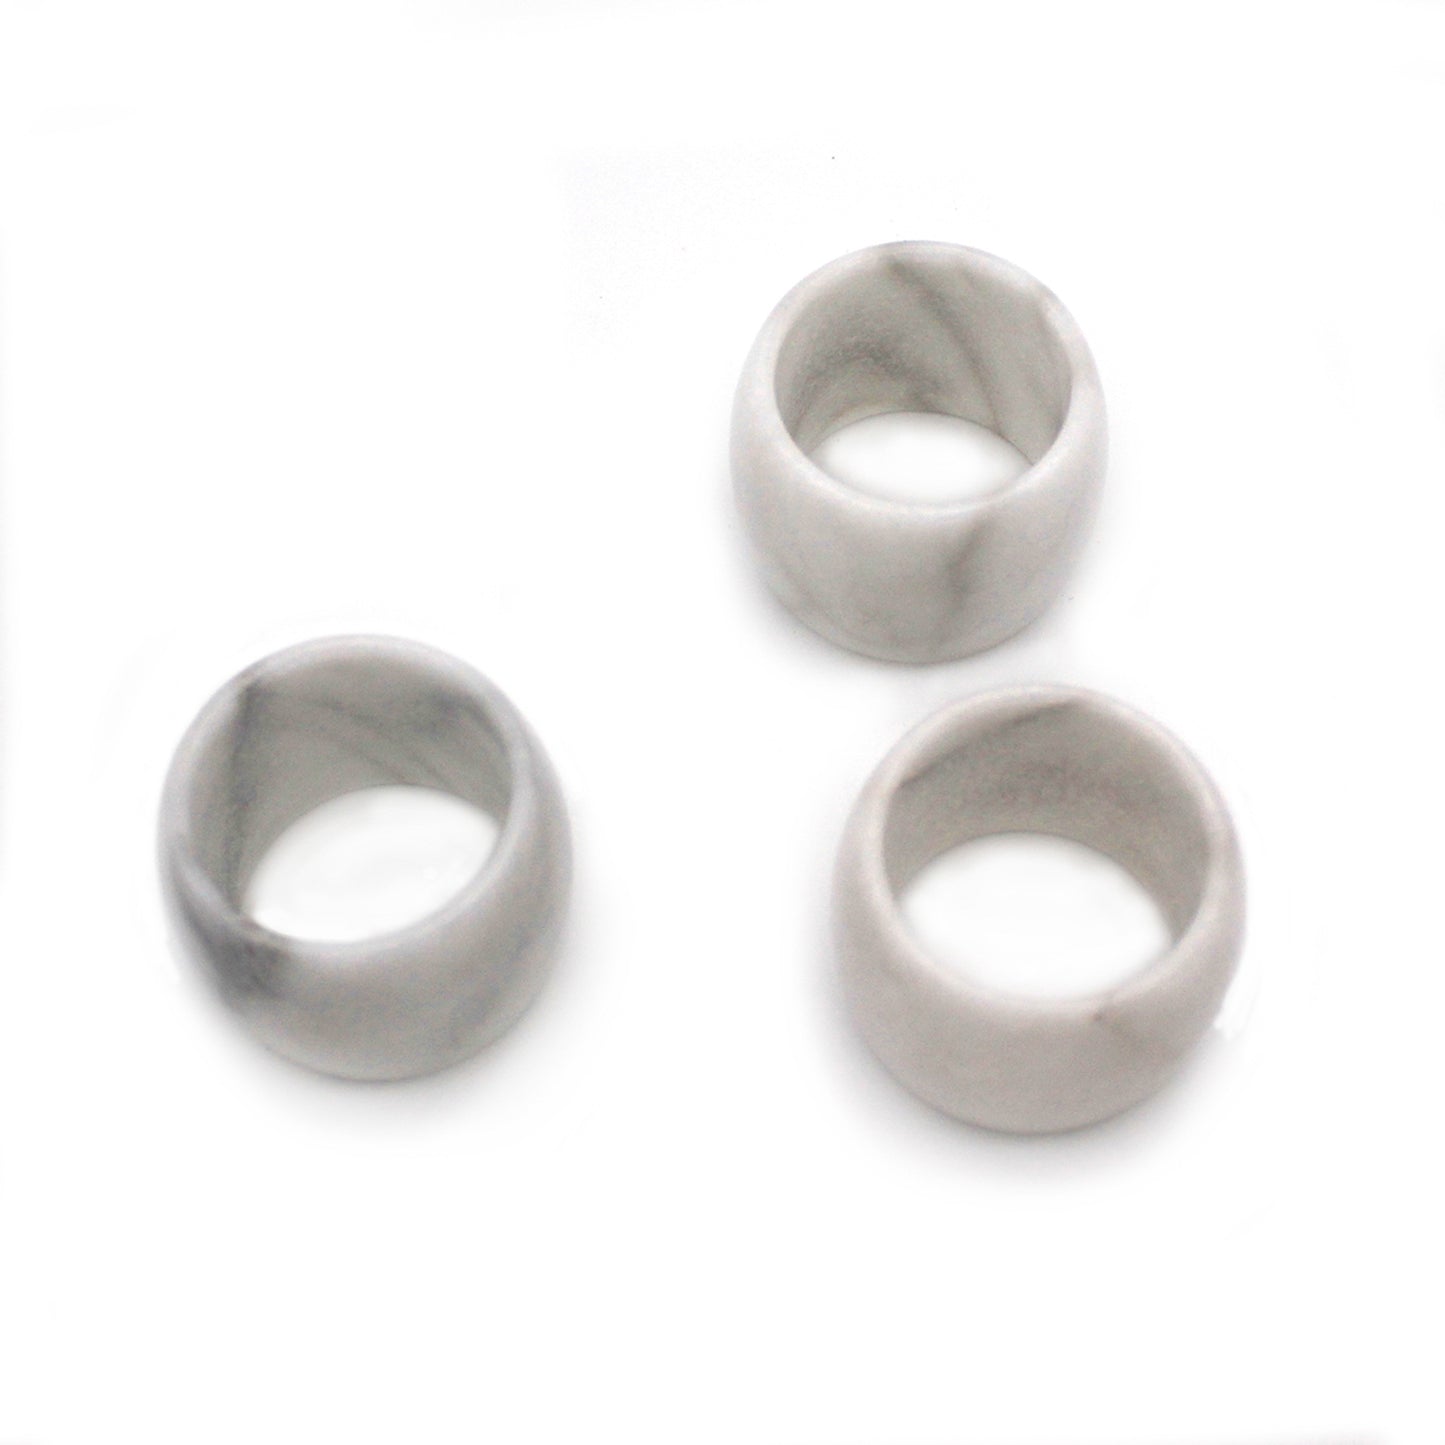 White Vermont Marble Napkin Rings (Set of 6)